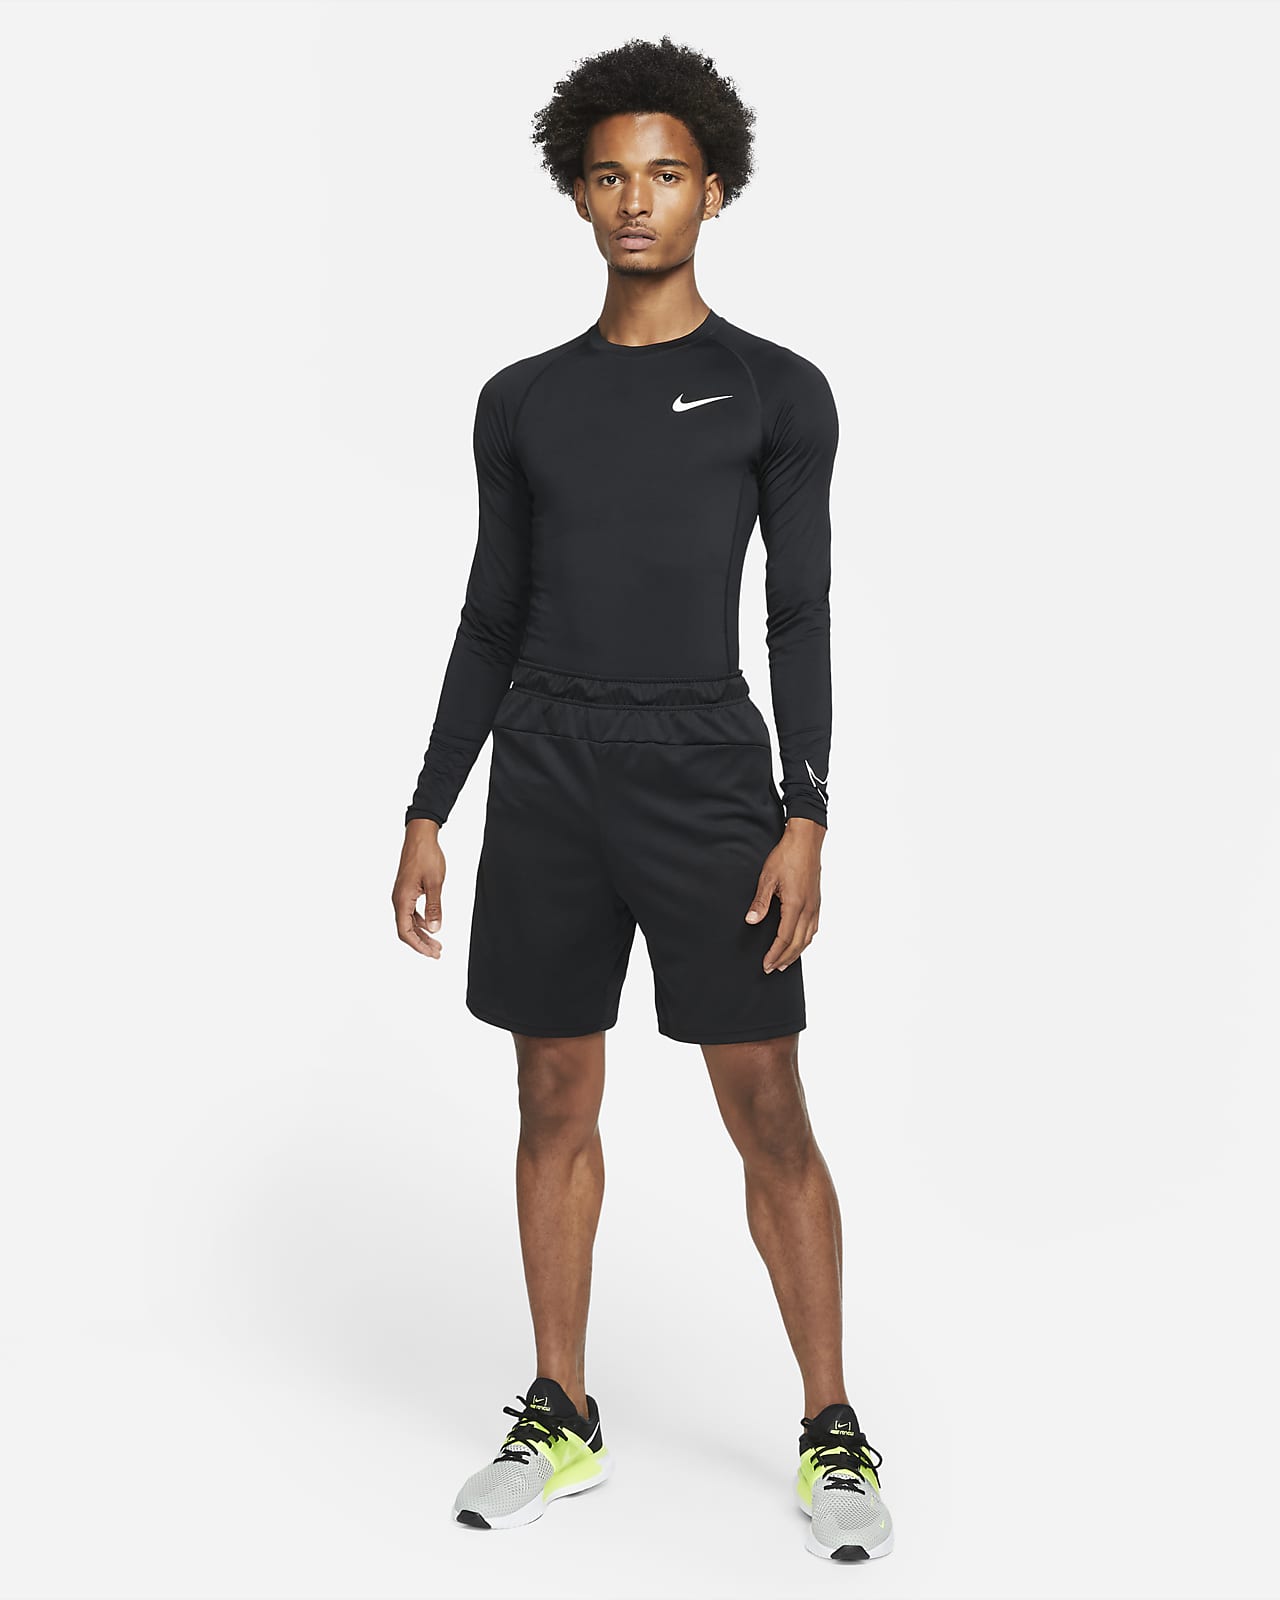 Nike Pro Dri-FIT Men's Tight-Fit Long-Sleeve Top. Nike LU